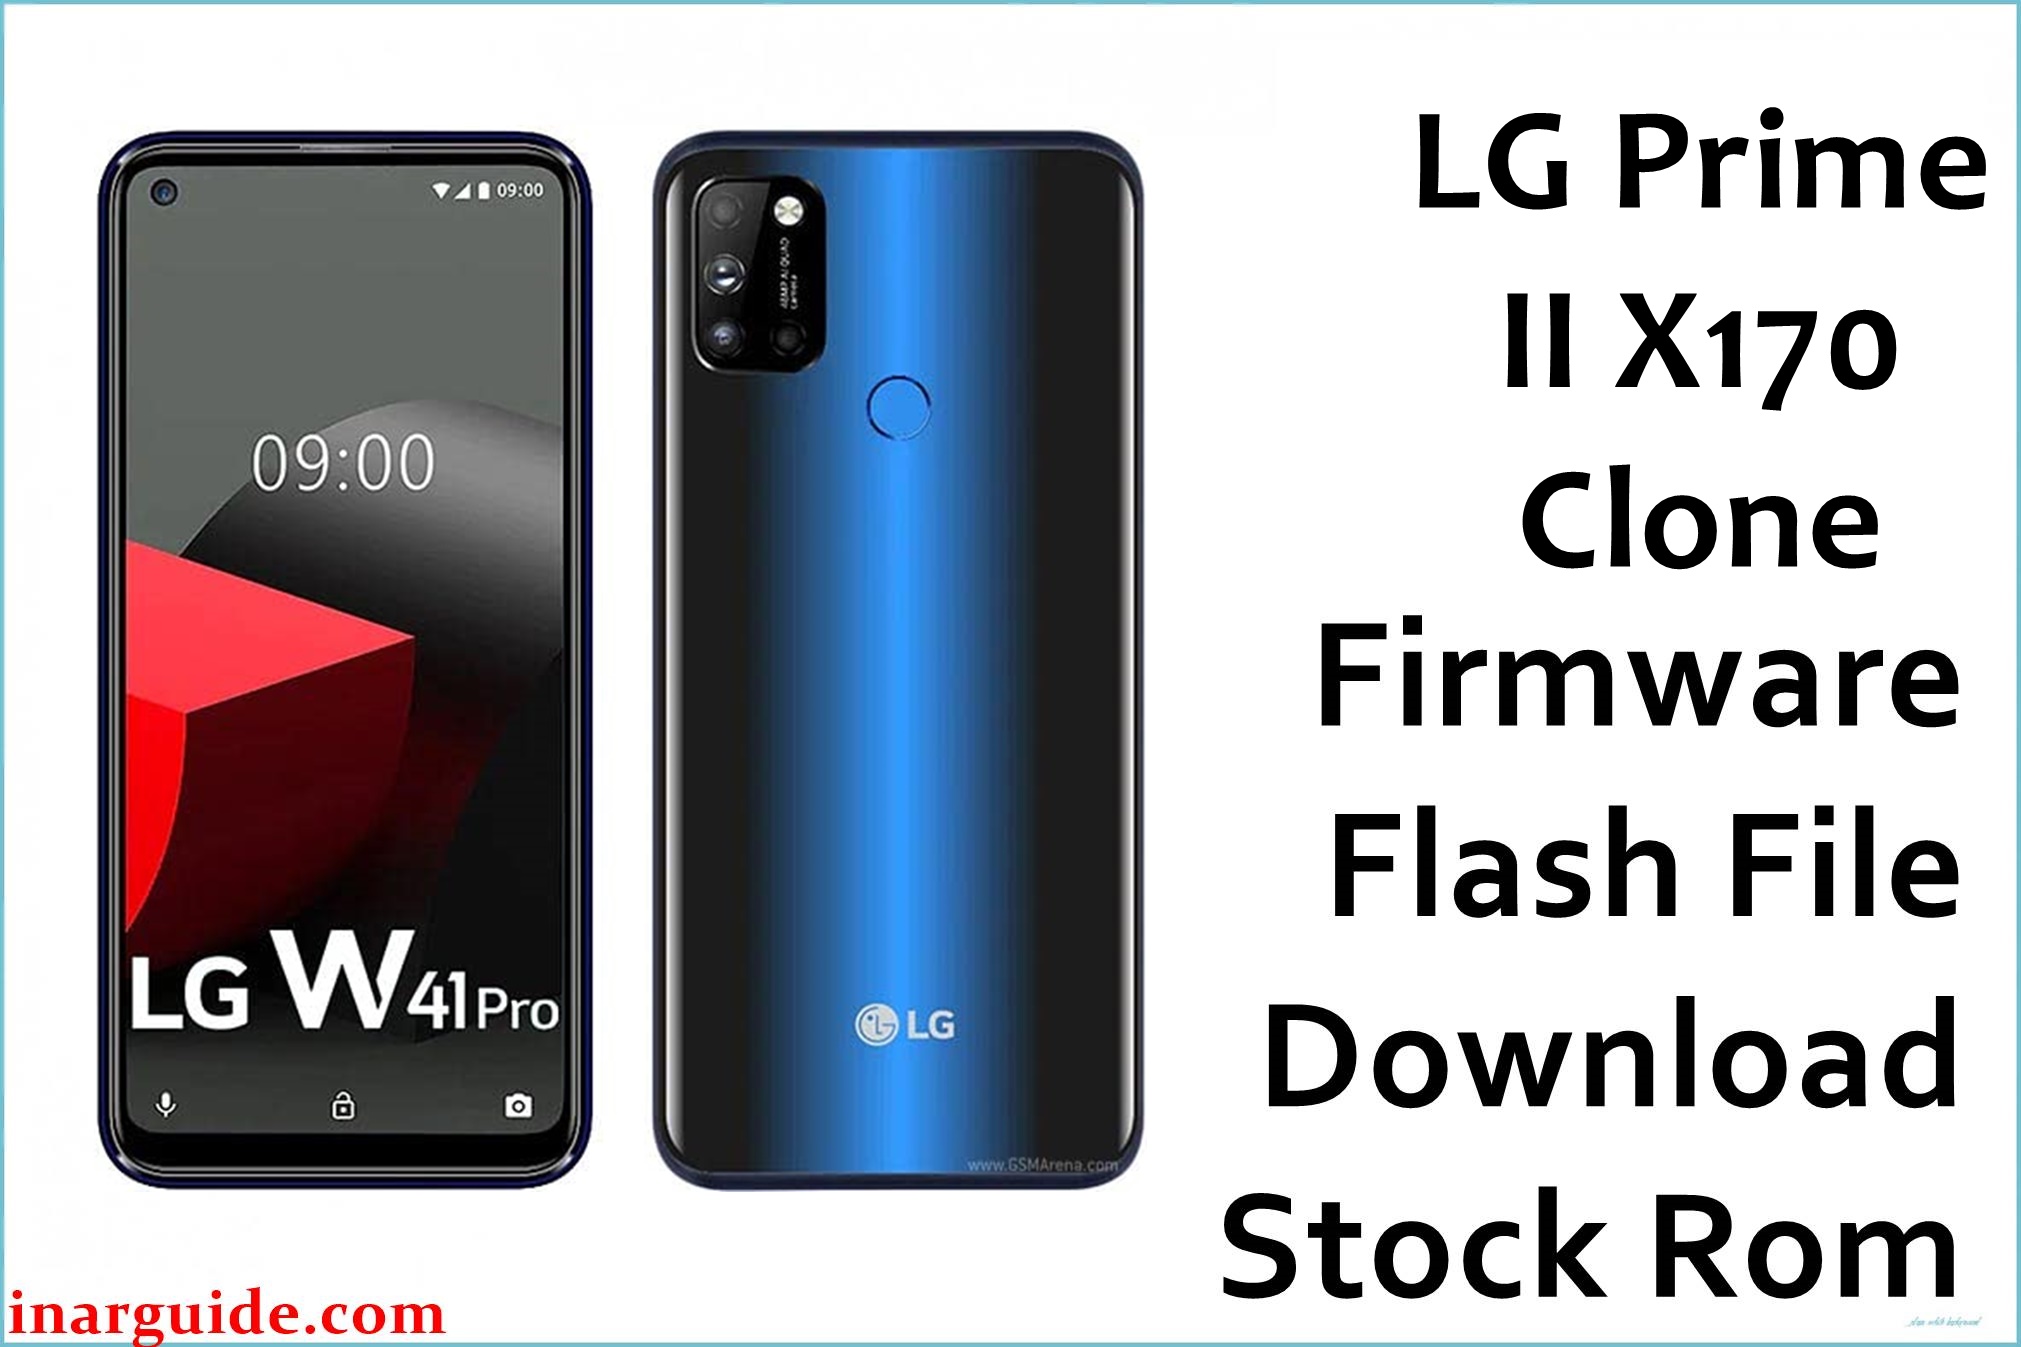 LG Prime II X170 Clone